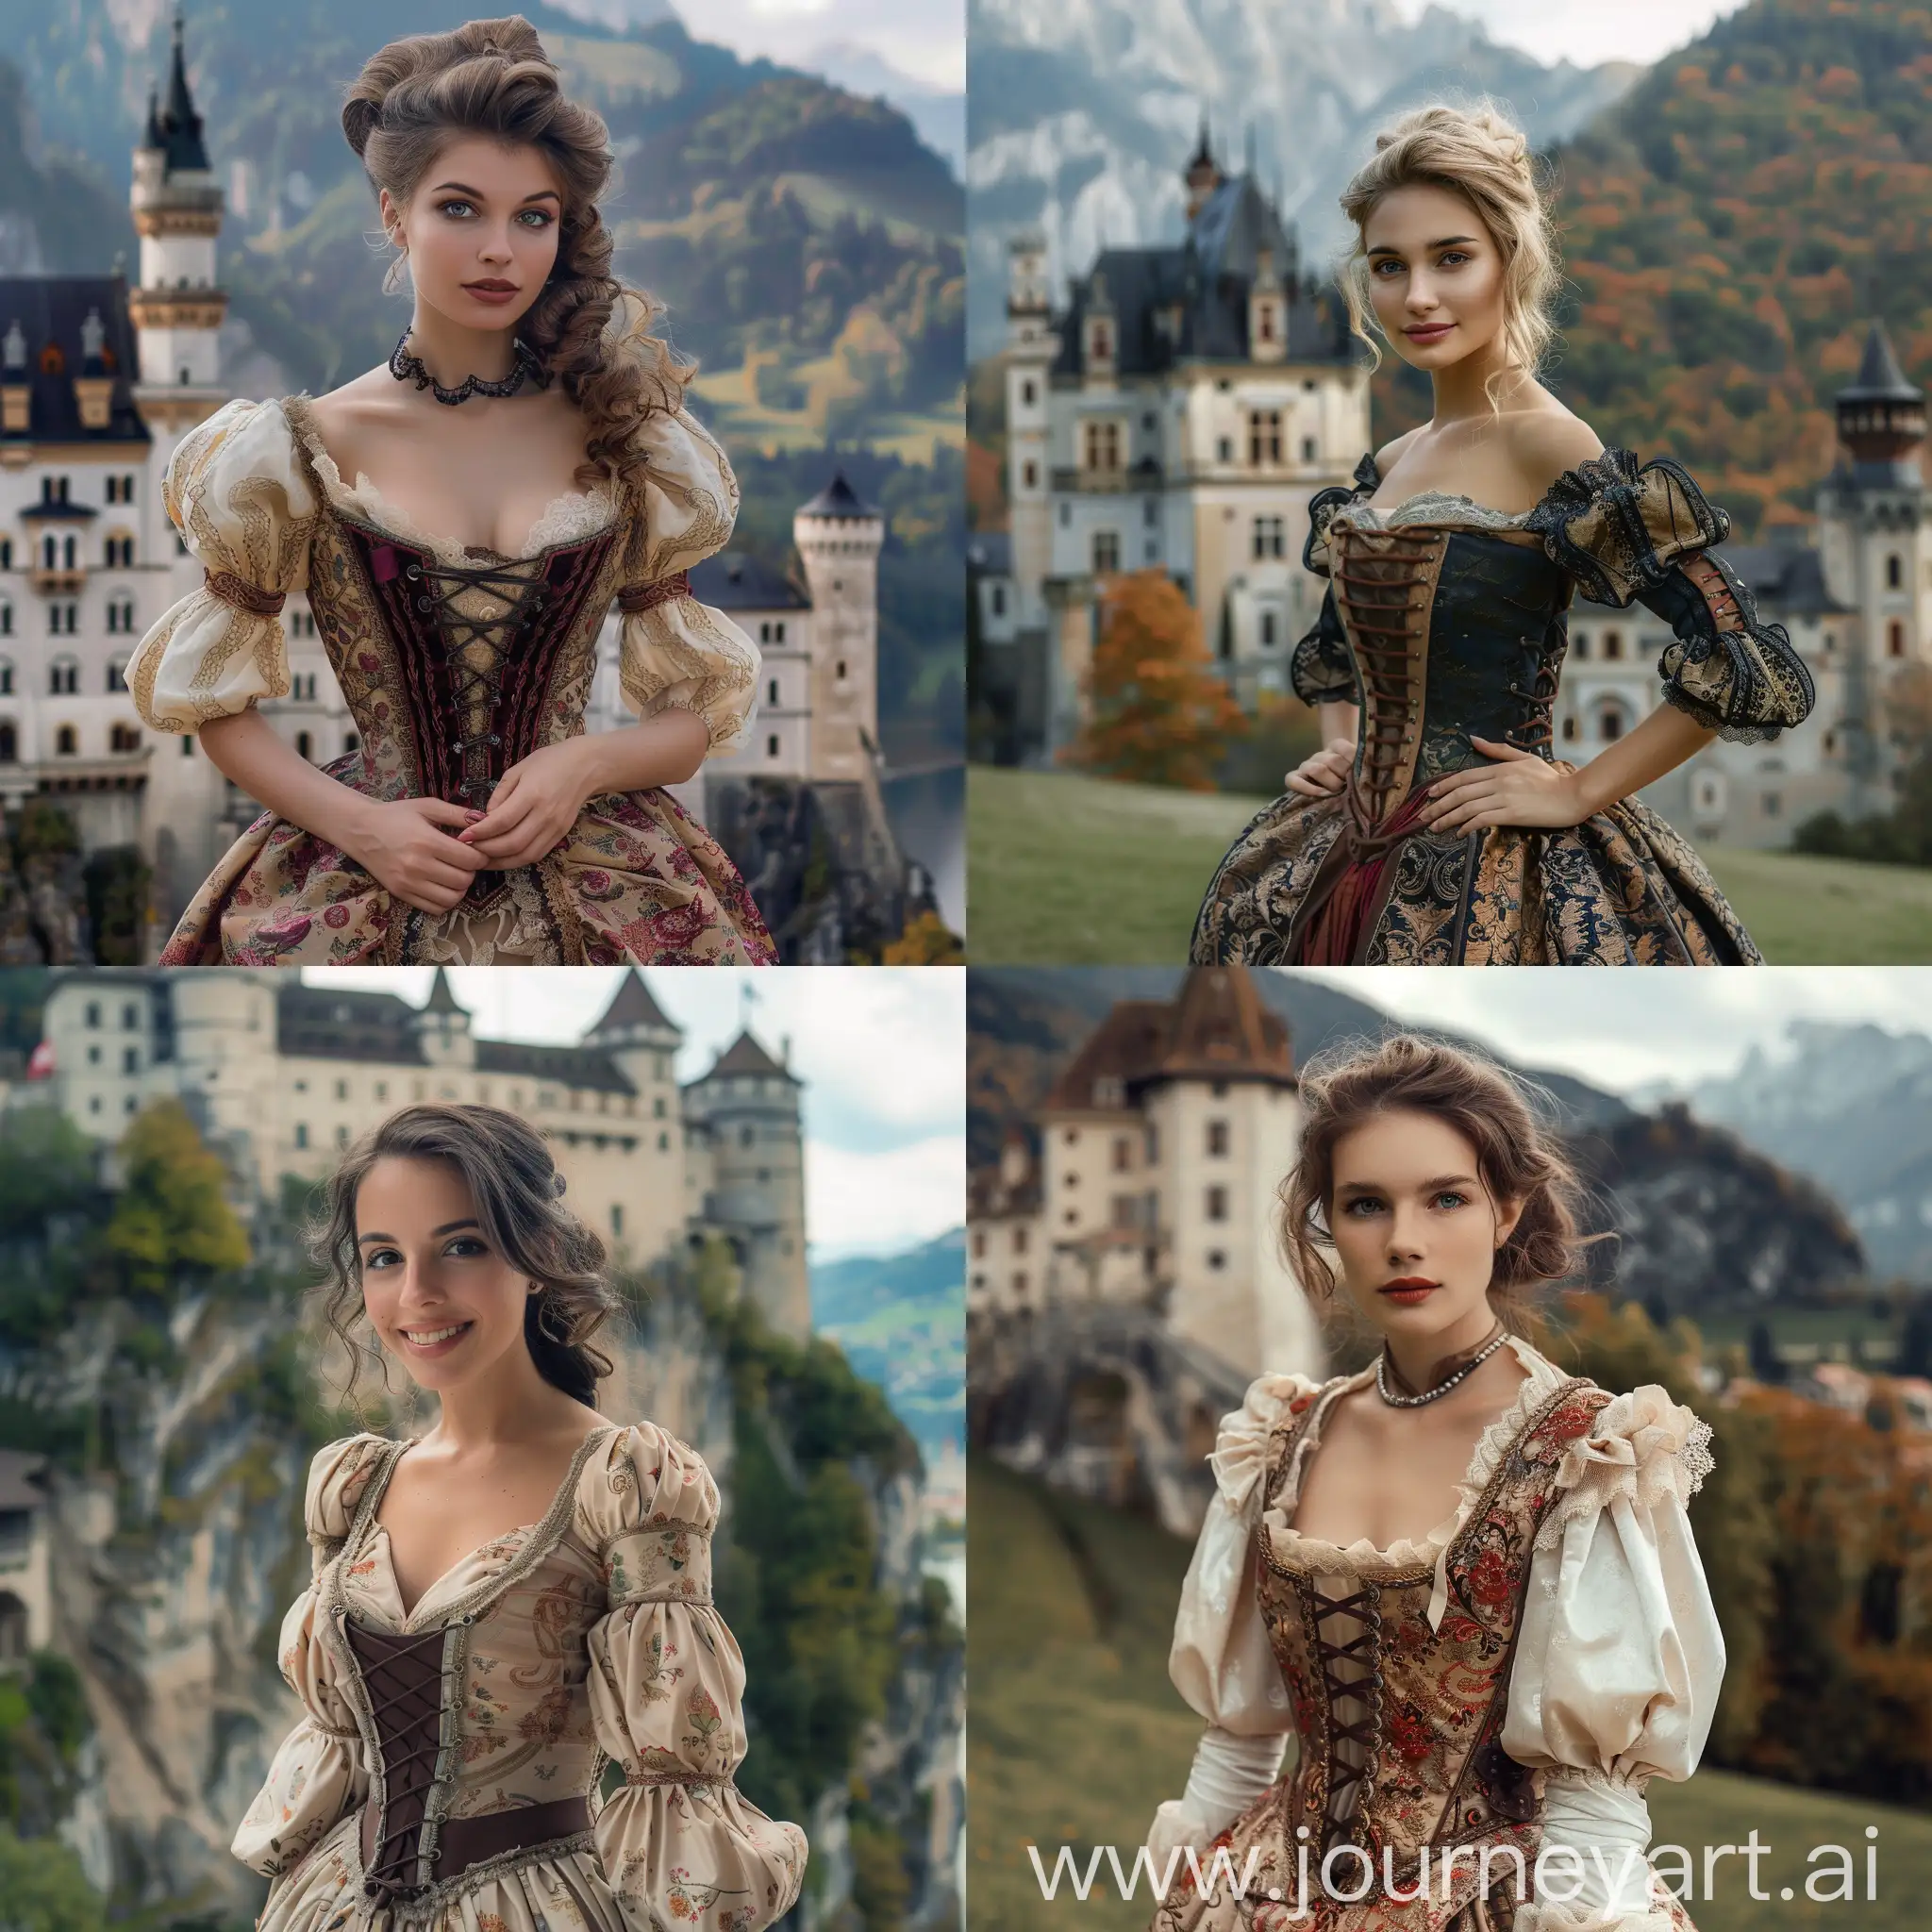 Elegant-Swiss-Woman-in-Baroque-Dress-at-Royal-Castle